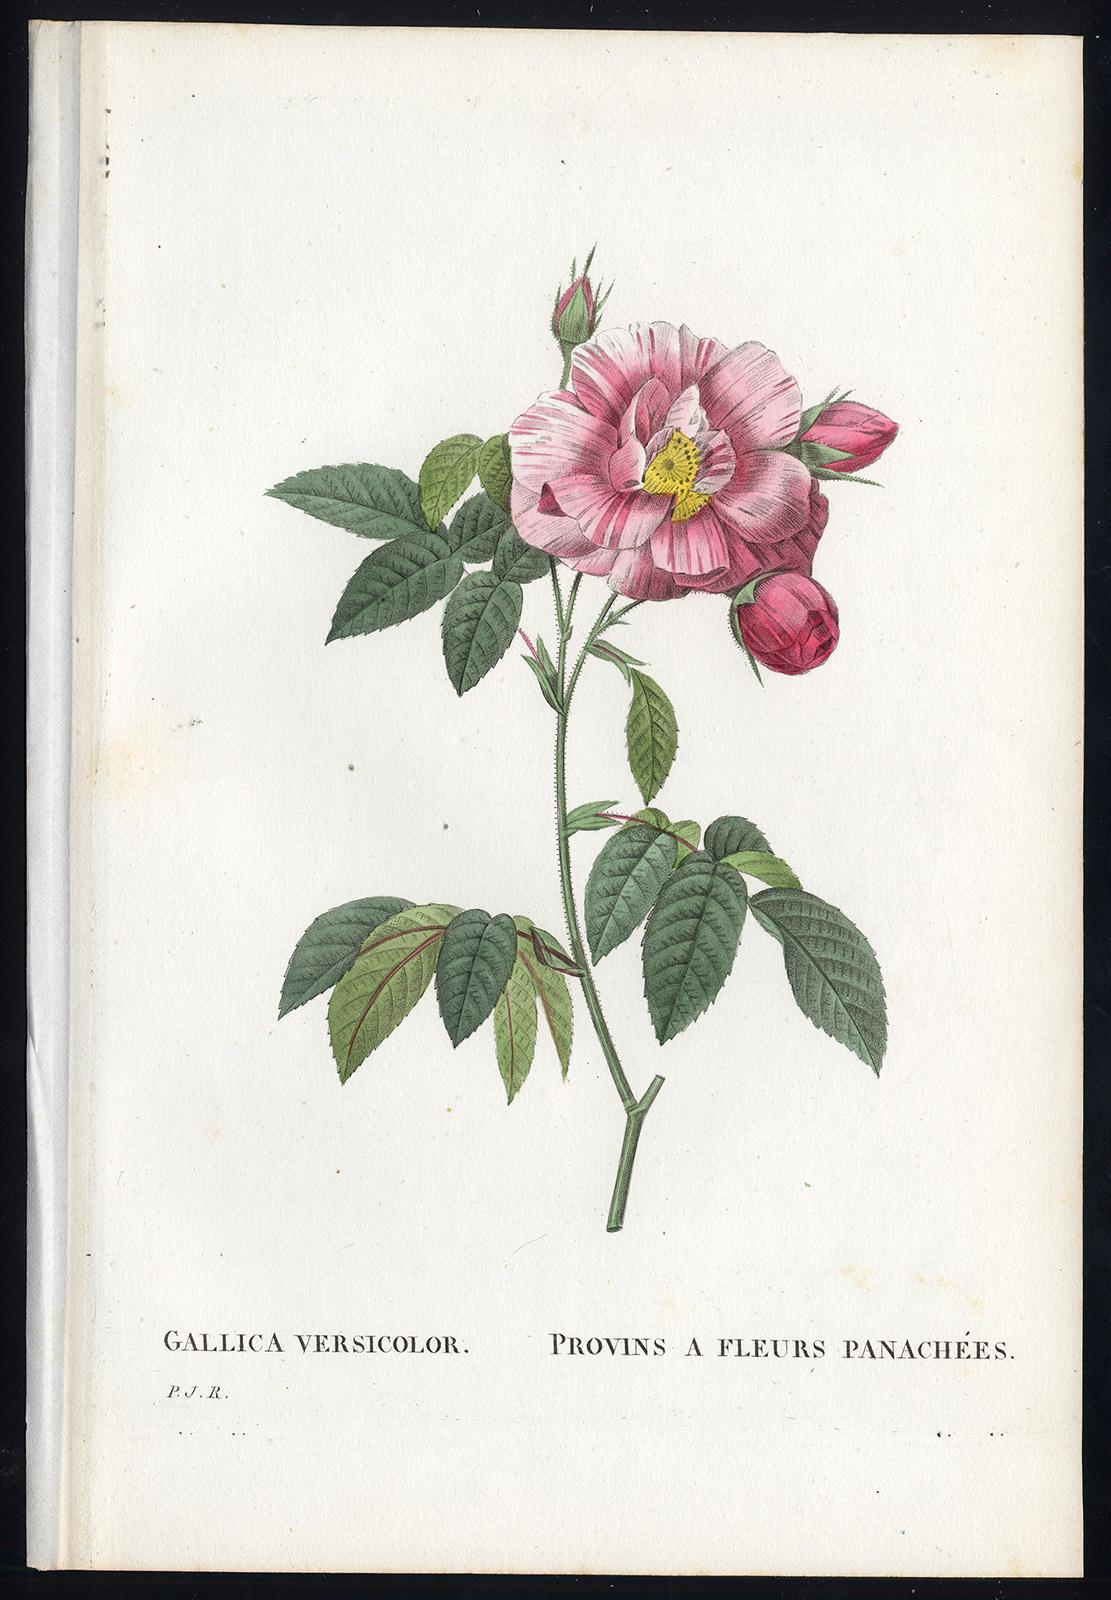 Pierre-Joseph Redouté Print - Rosa Mundi - Gallica Versicolor by Redoute - Handcoloured engraving - 19th c.